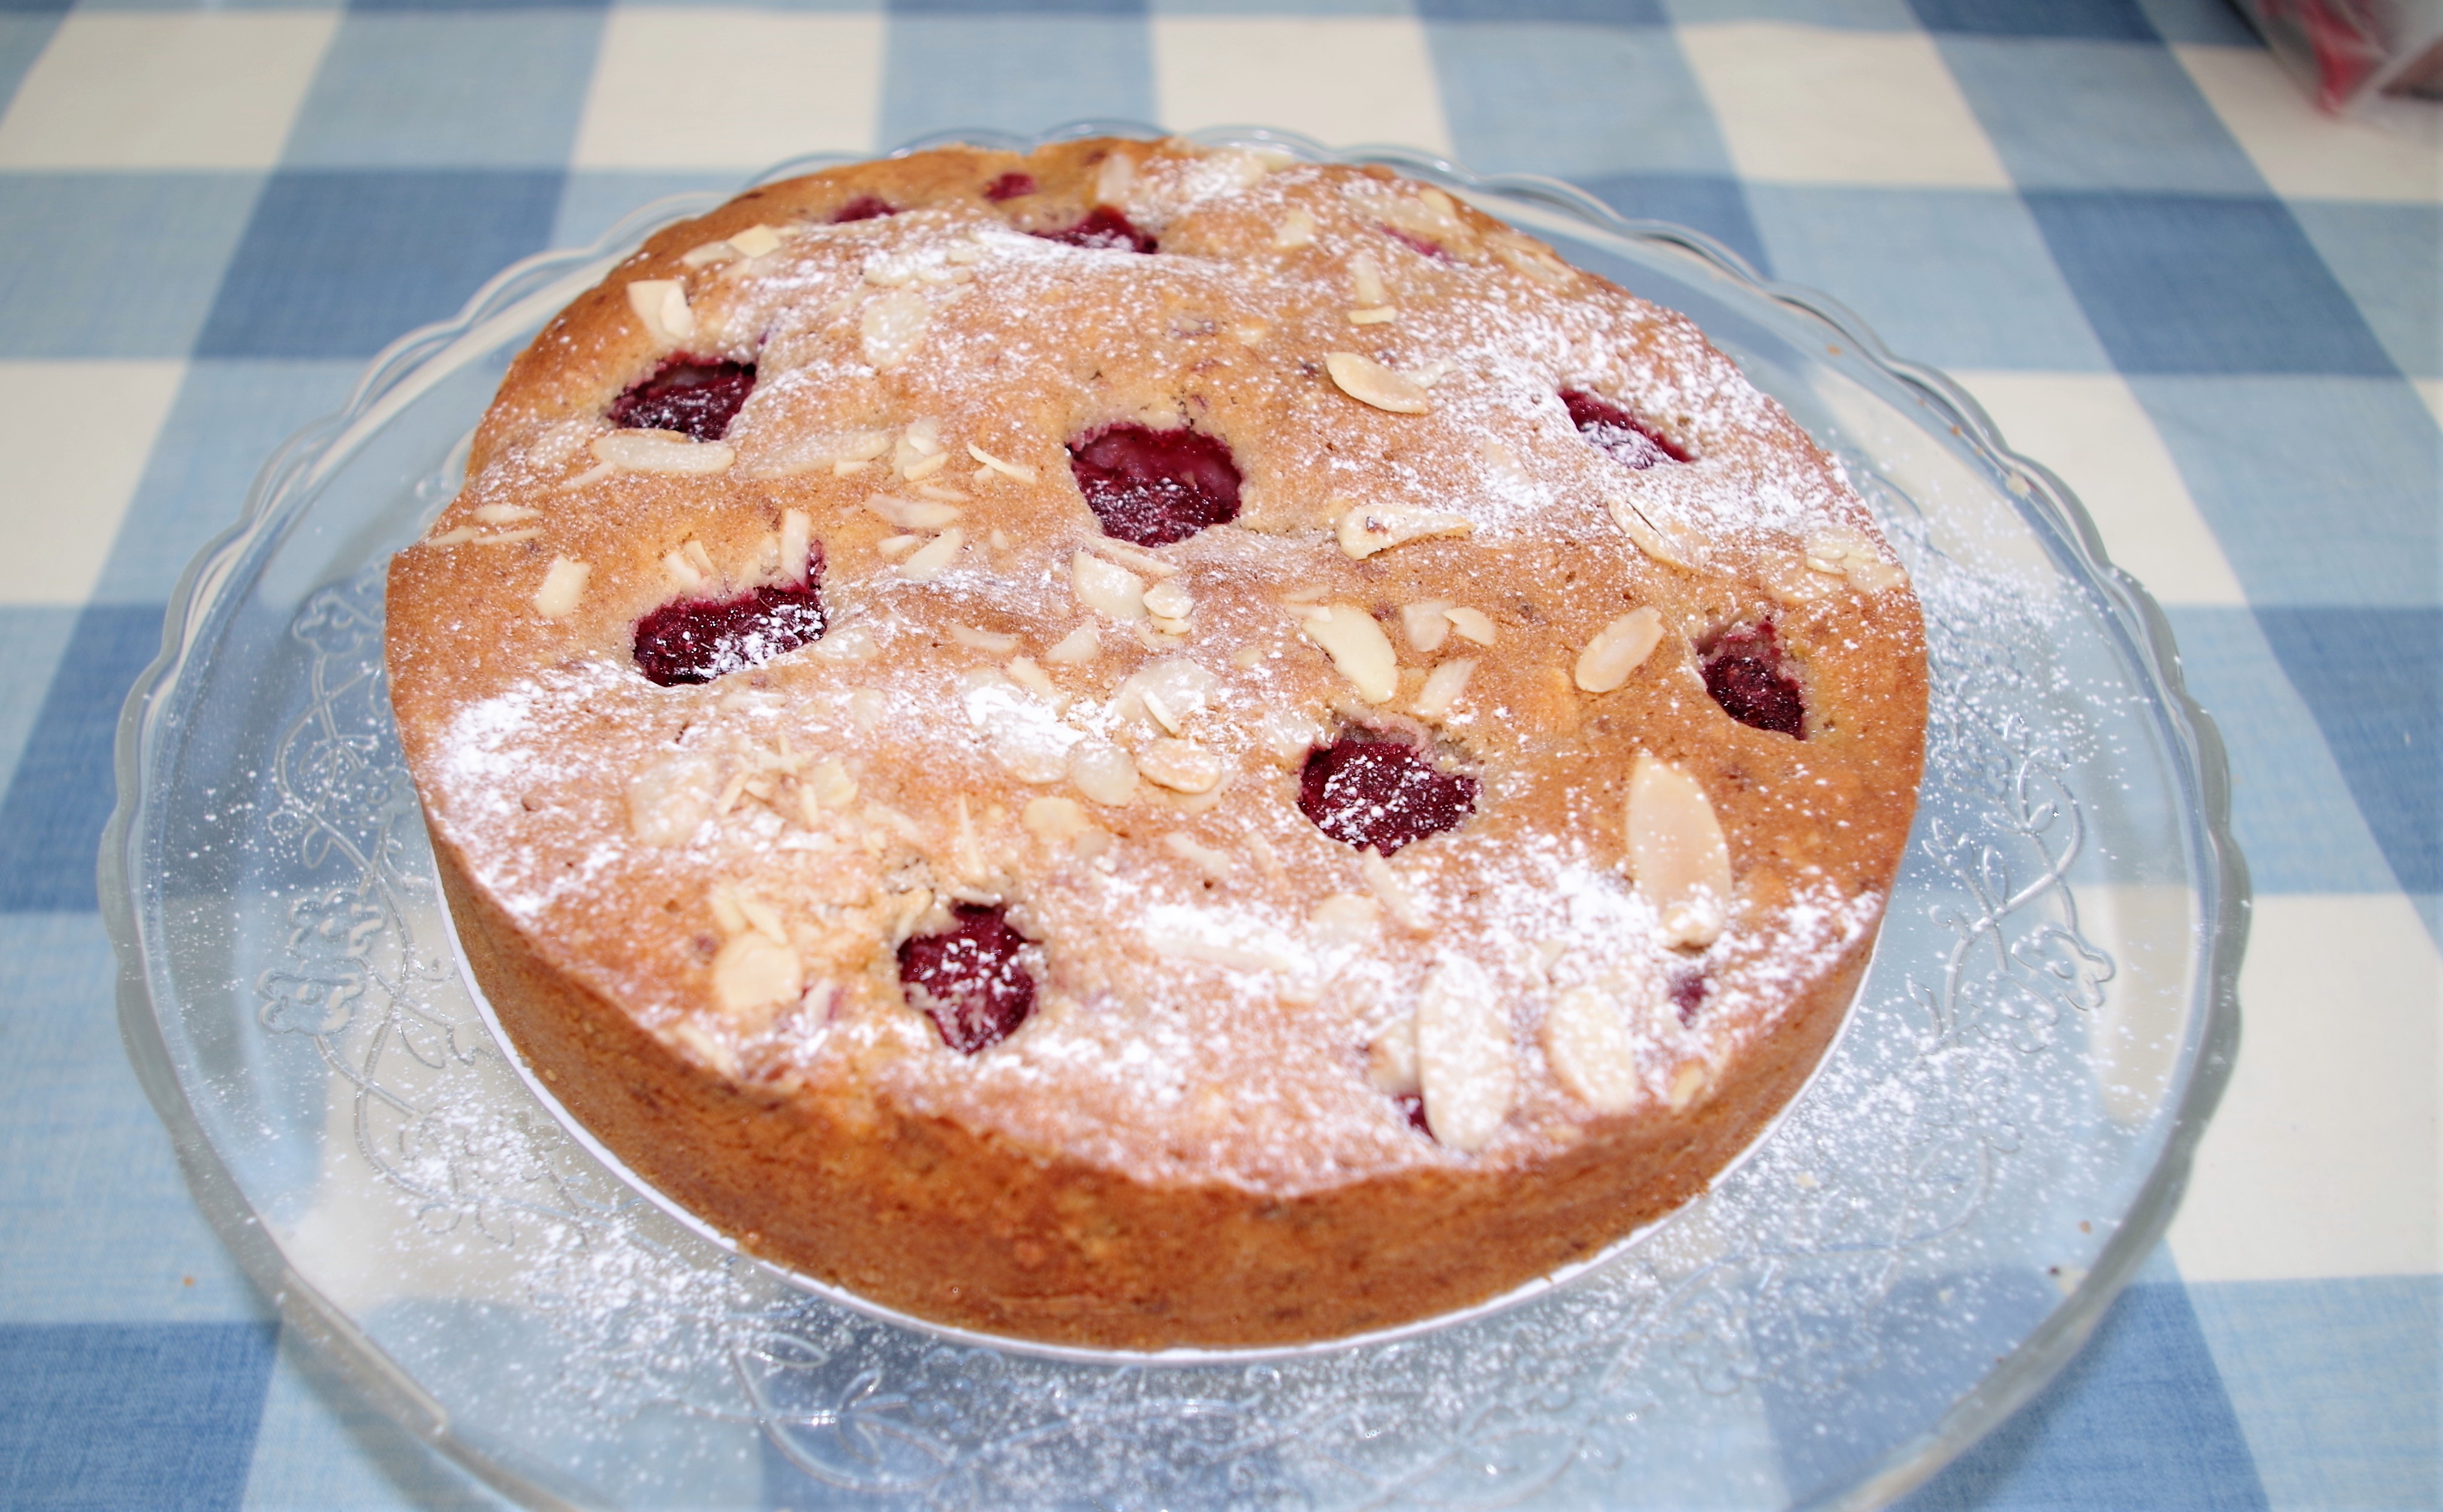 IMGP3405 Mon 17th Raspberry & Almond cake for jig saw - 101 Cakes